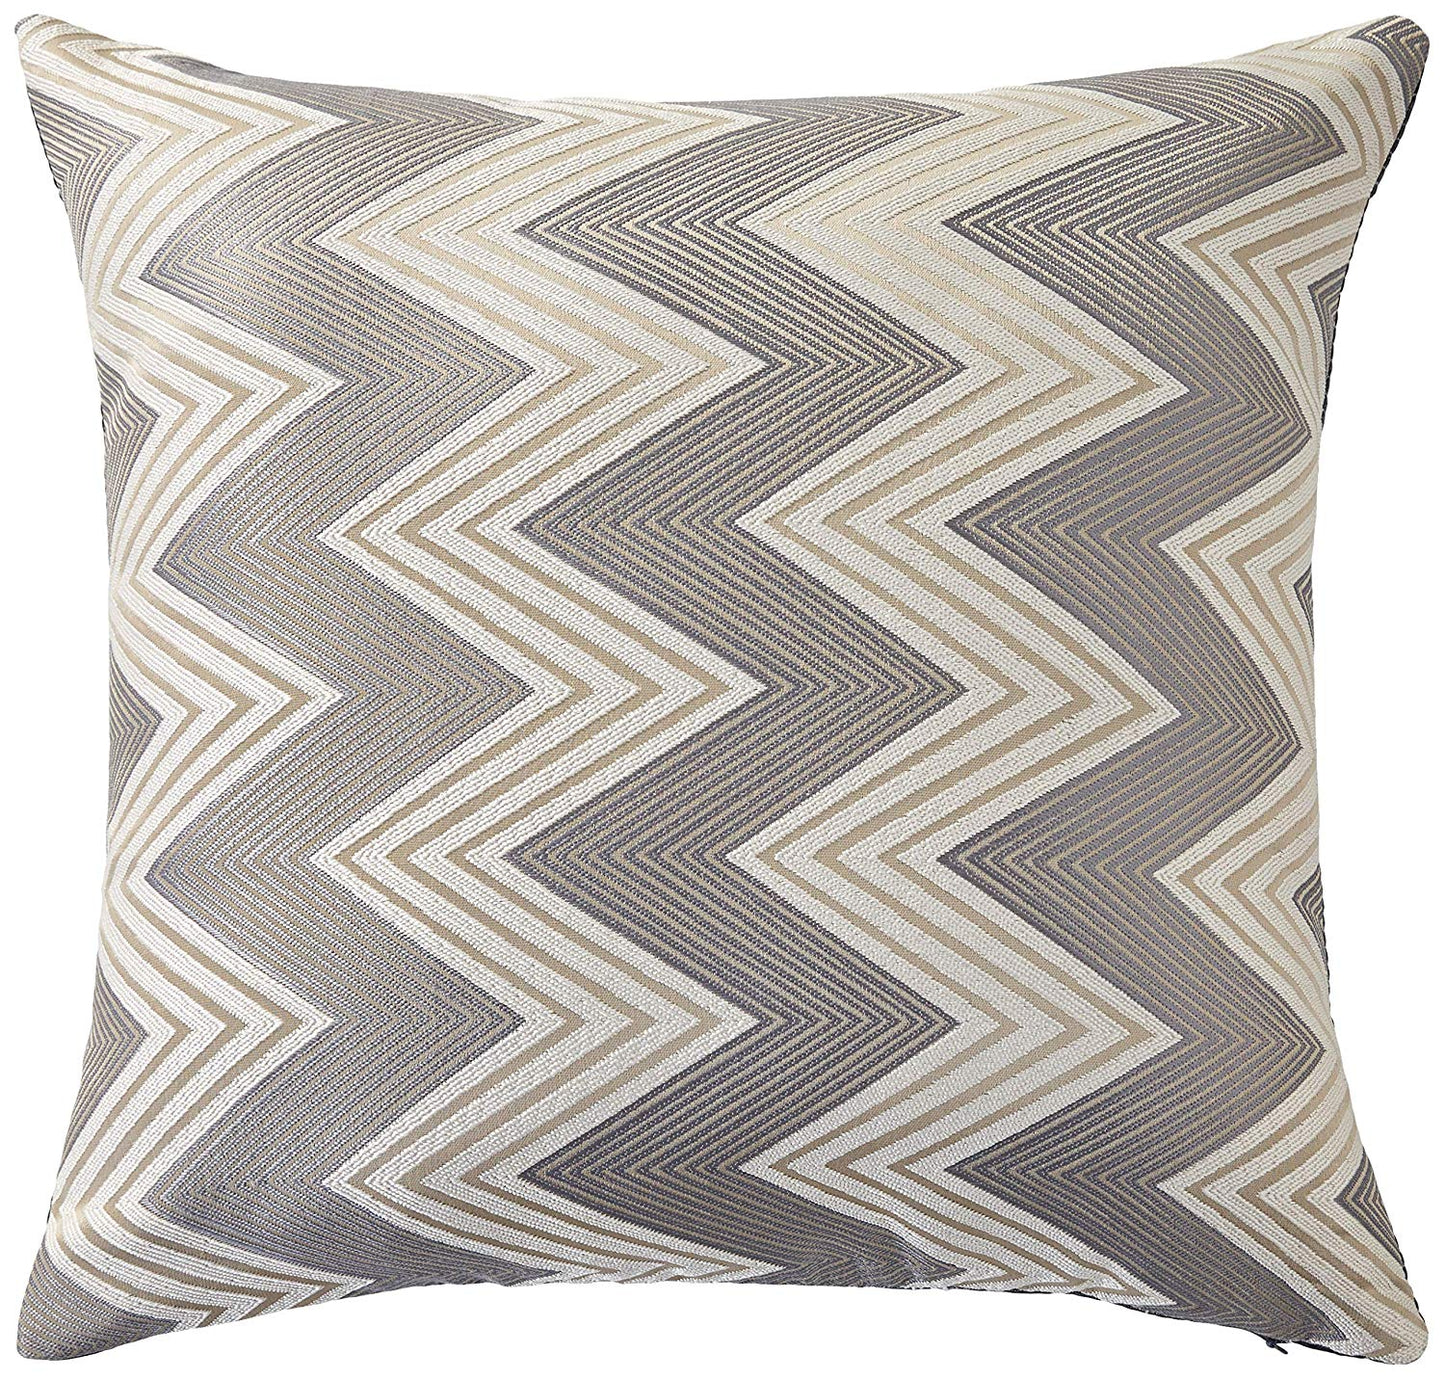 Indiana Chenille Chevron Design Decorative Accent Throw Pillow